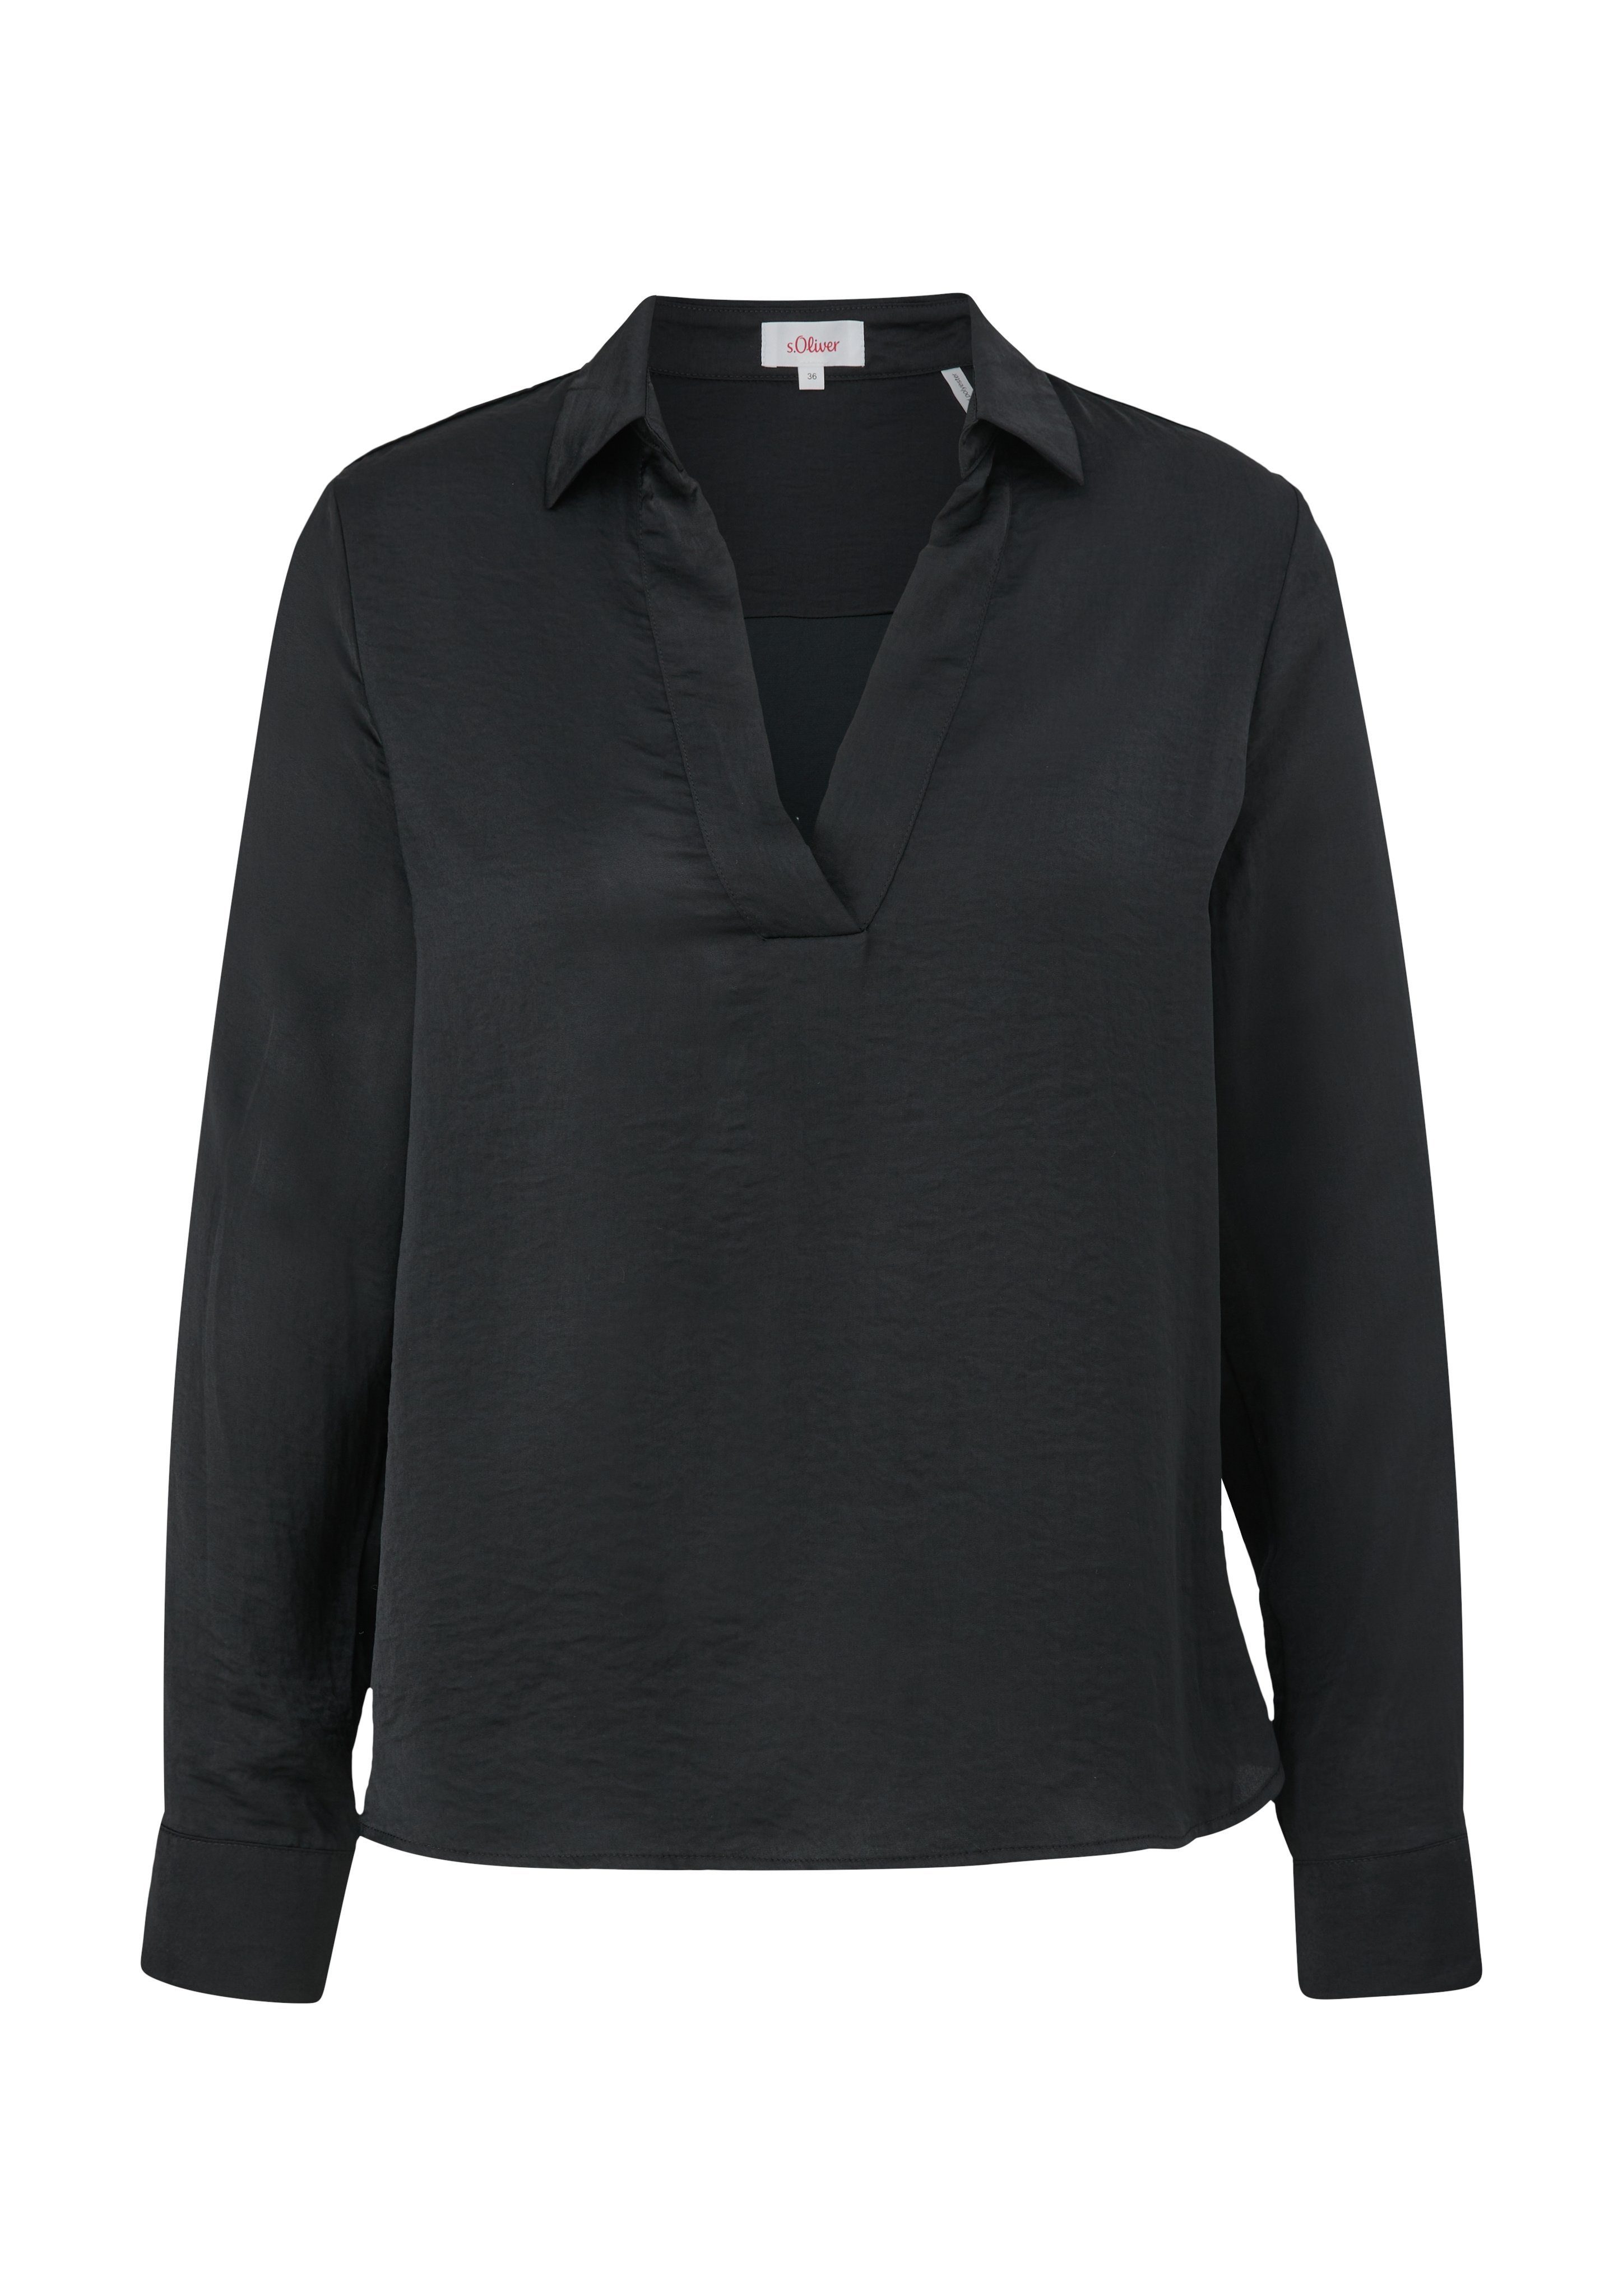 s.Oliver Klassische Bluse Bluse aus Polyester recyceltem schwarz